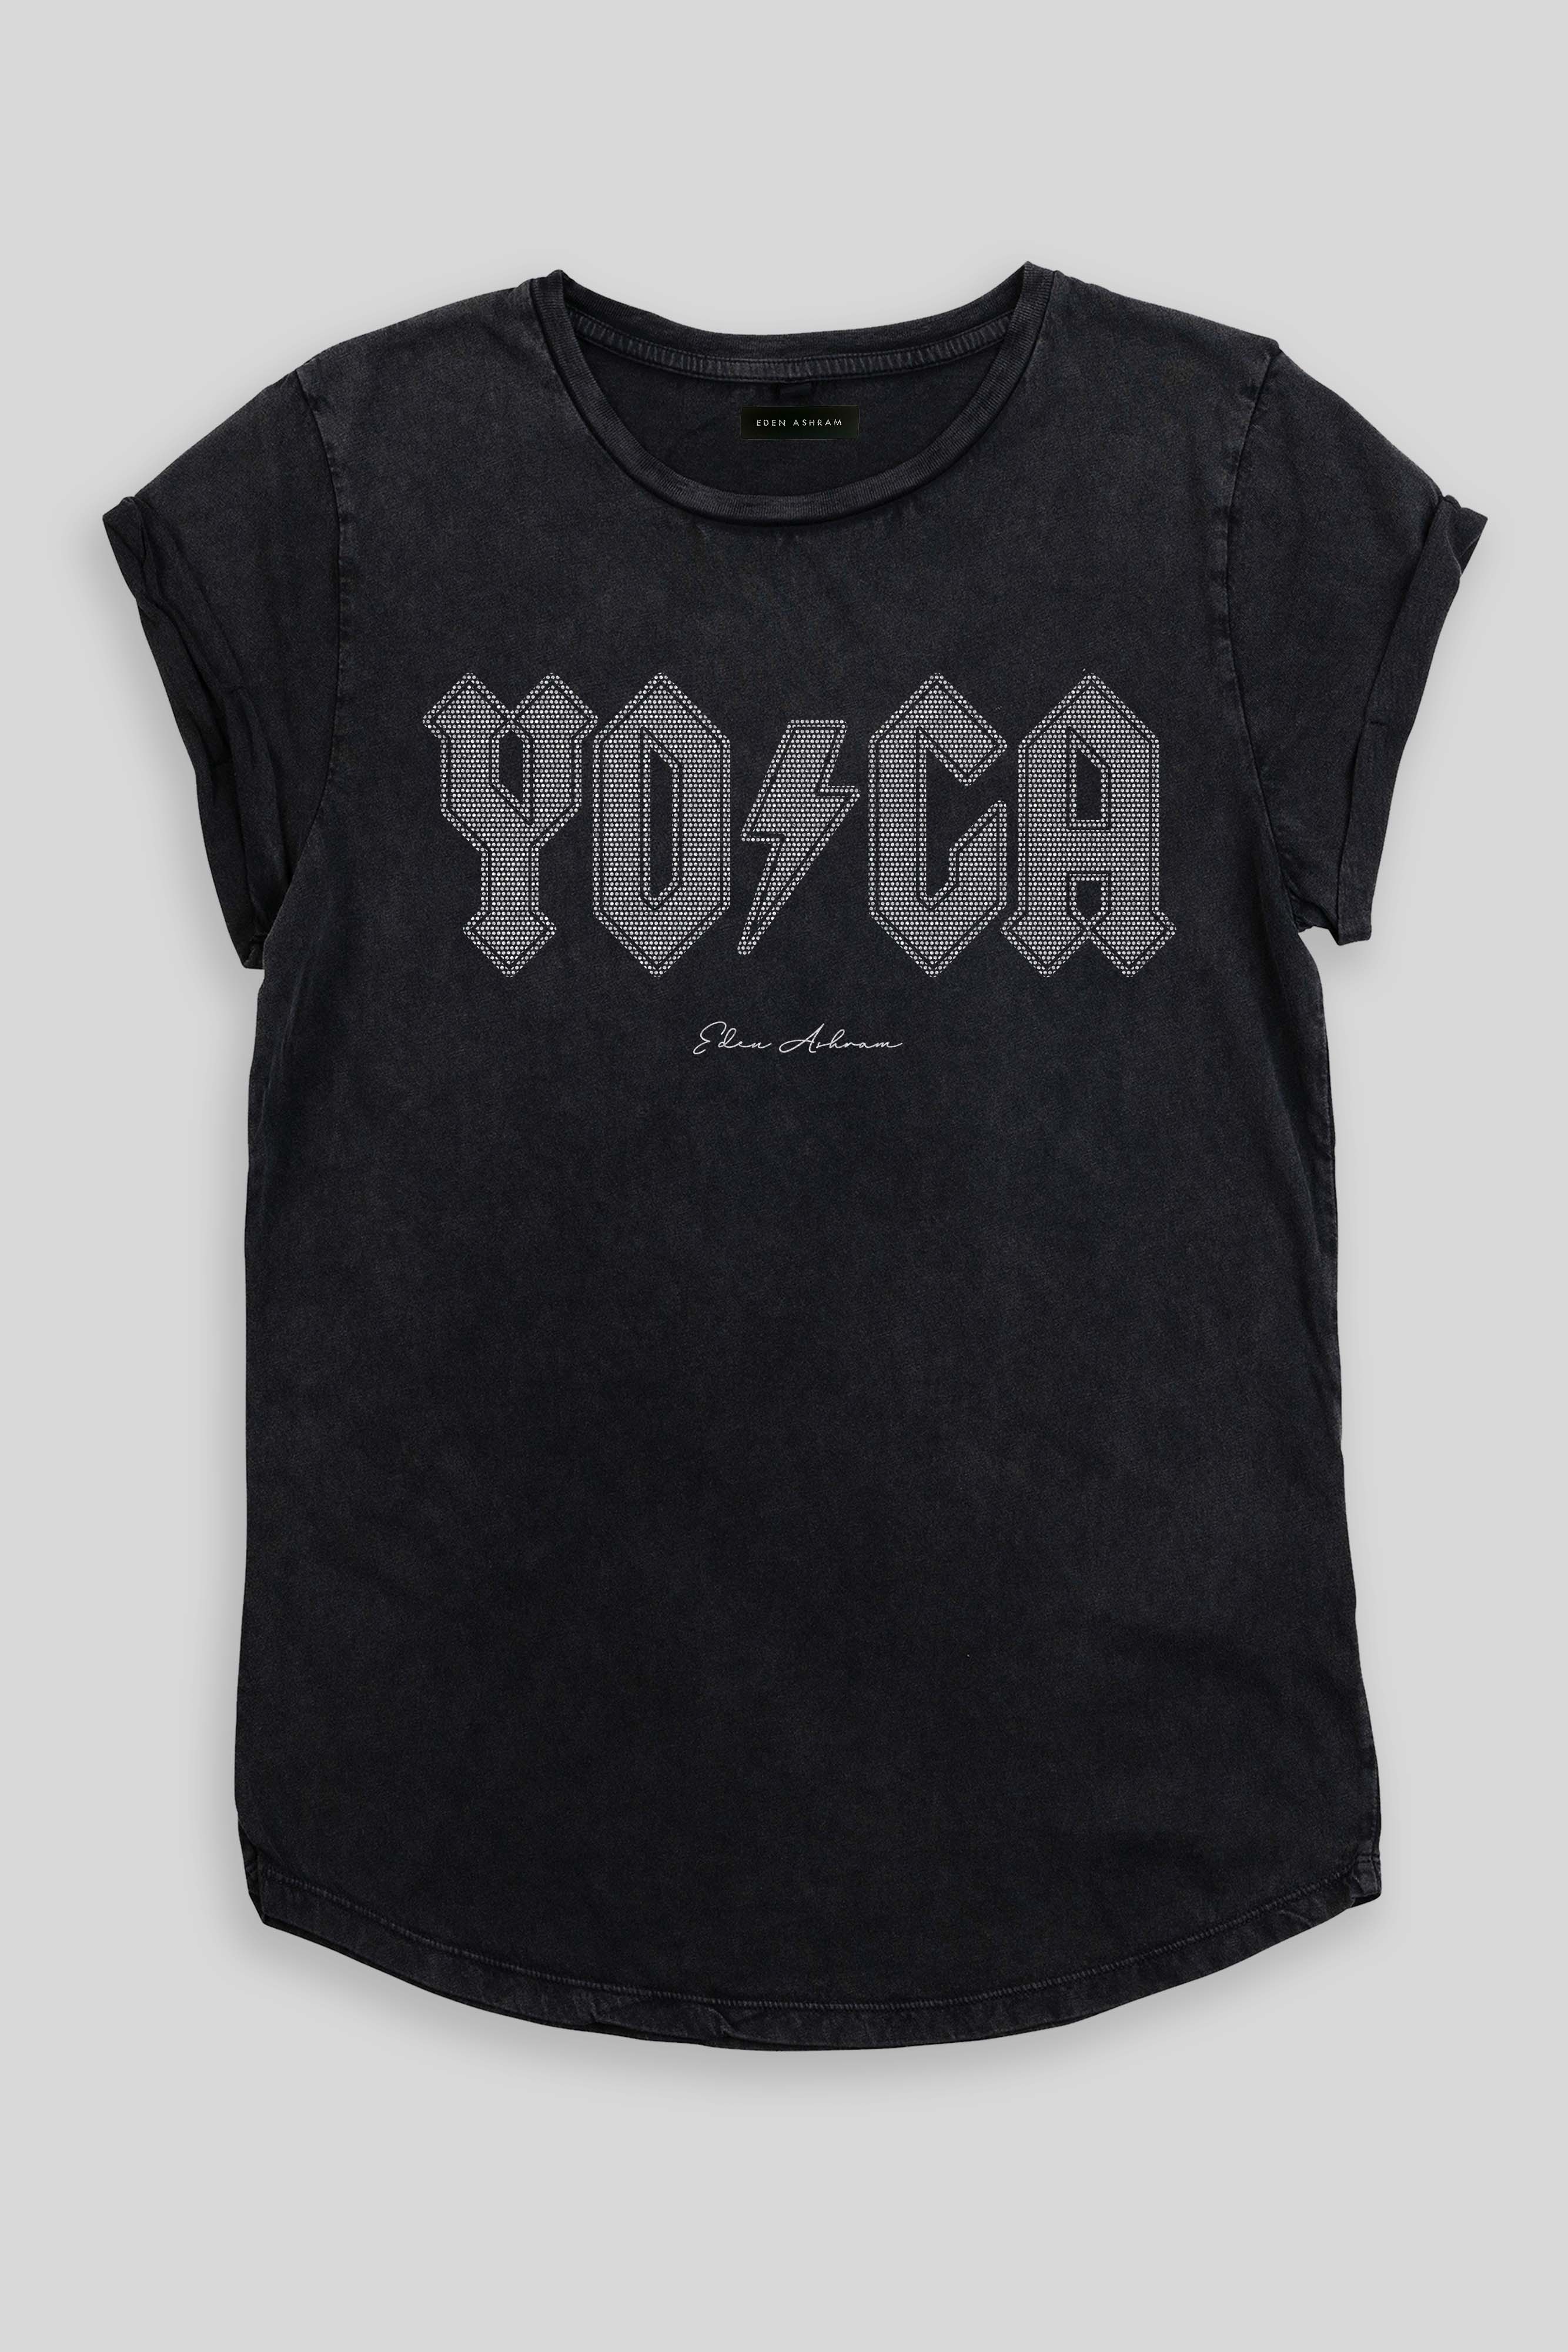 EDEN ASHRAM Yoga Tour Glitter Rolled Sleeve Tour T-Shirt - Stonewash Black Stonewash Black